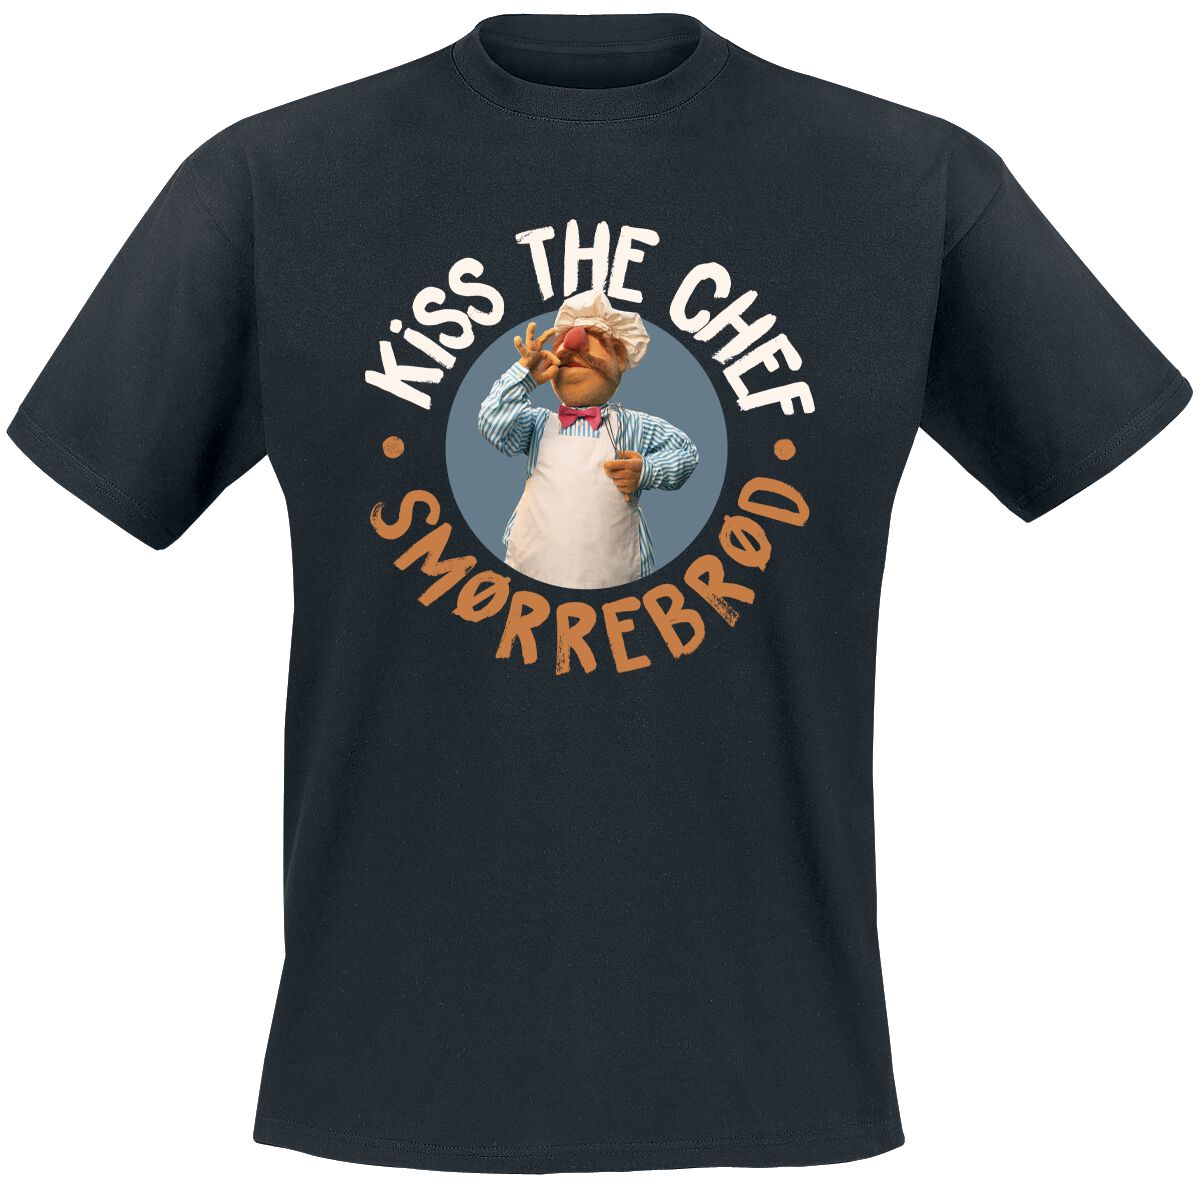 Die Muppets Kiss The Chef - Smorrebrod T-Shirt schwarz in XXL